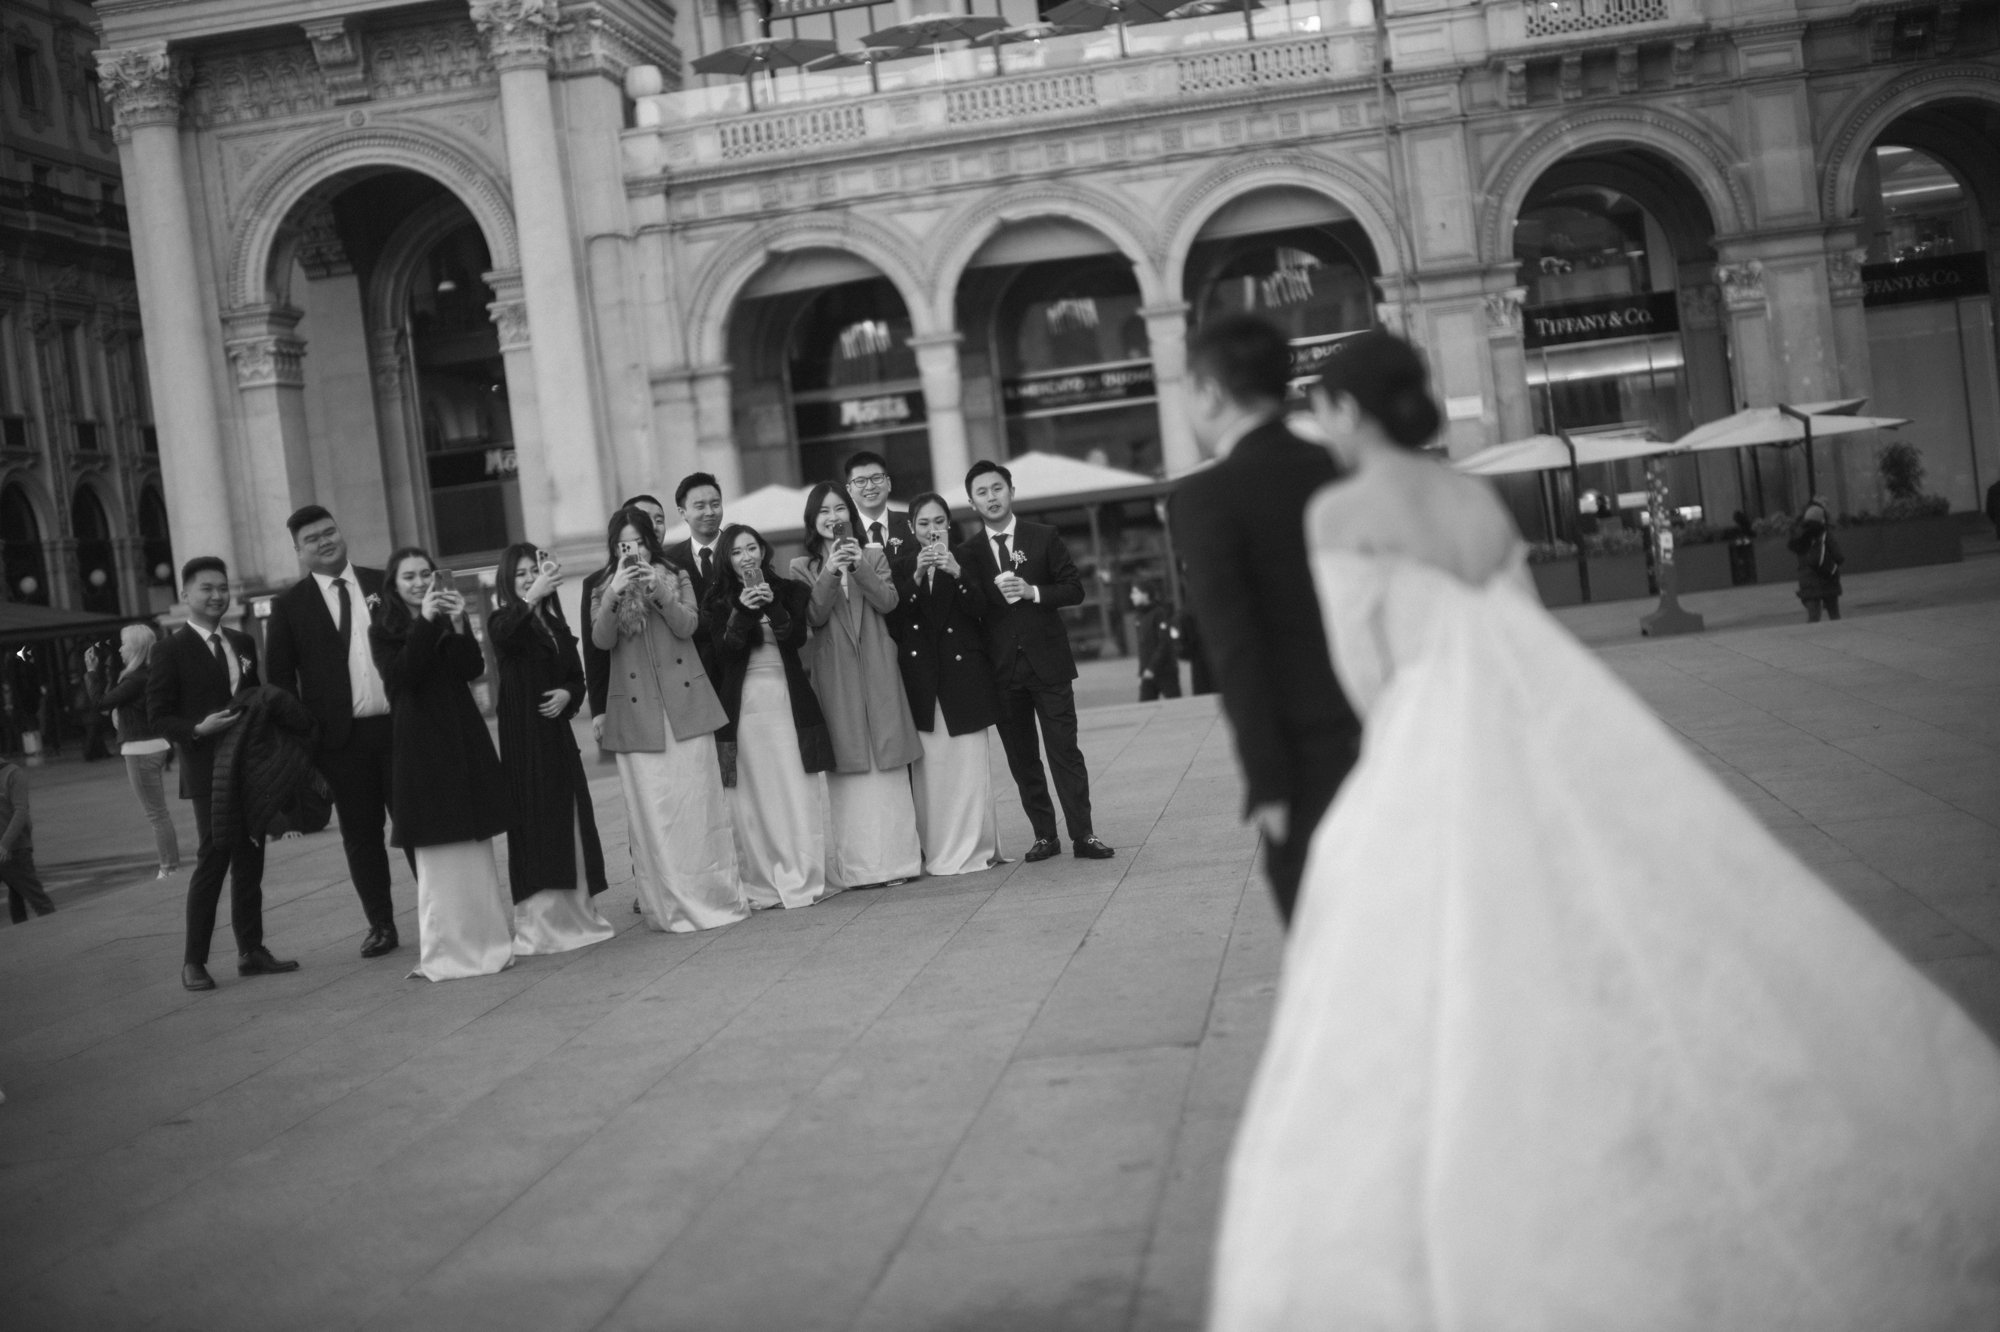 Prawira-Evelyn-Dolomites-Italy-Santre wedding-Yefta Gunawan-Jeriko MUA-Carol Kuntjoro Photography-19.jpg